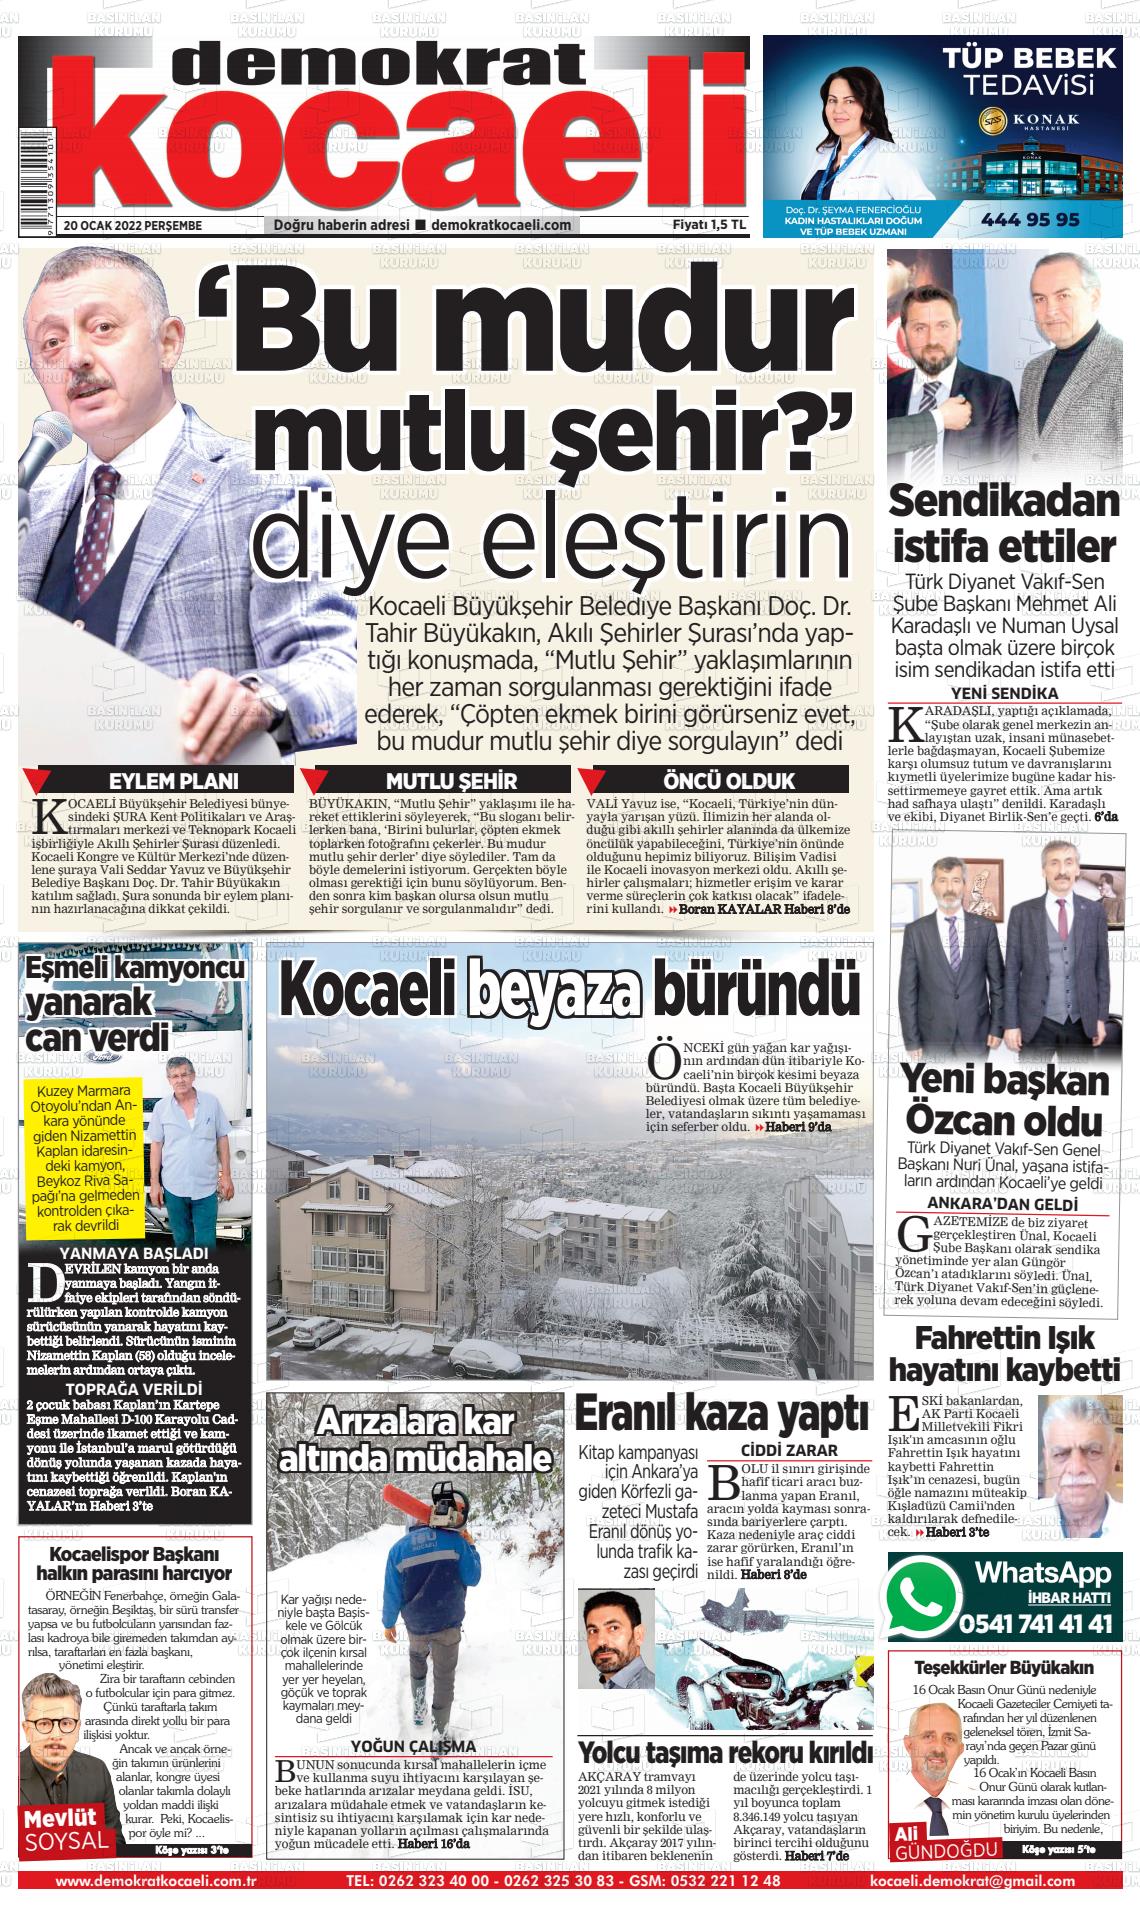 20 Ocak 2022 Demokrat Kocaeli Gazete Manşeti